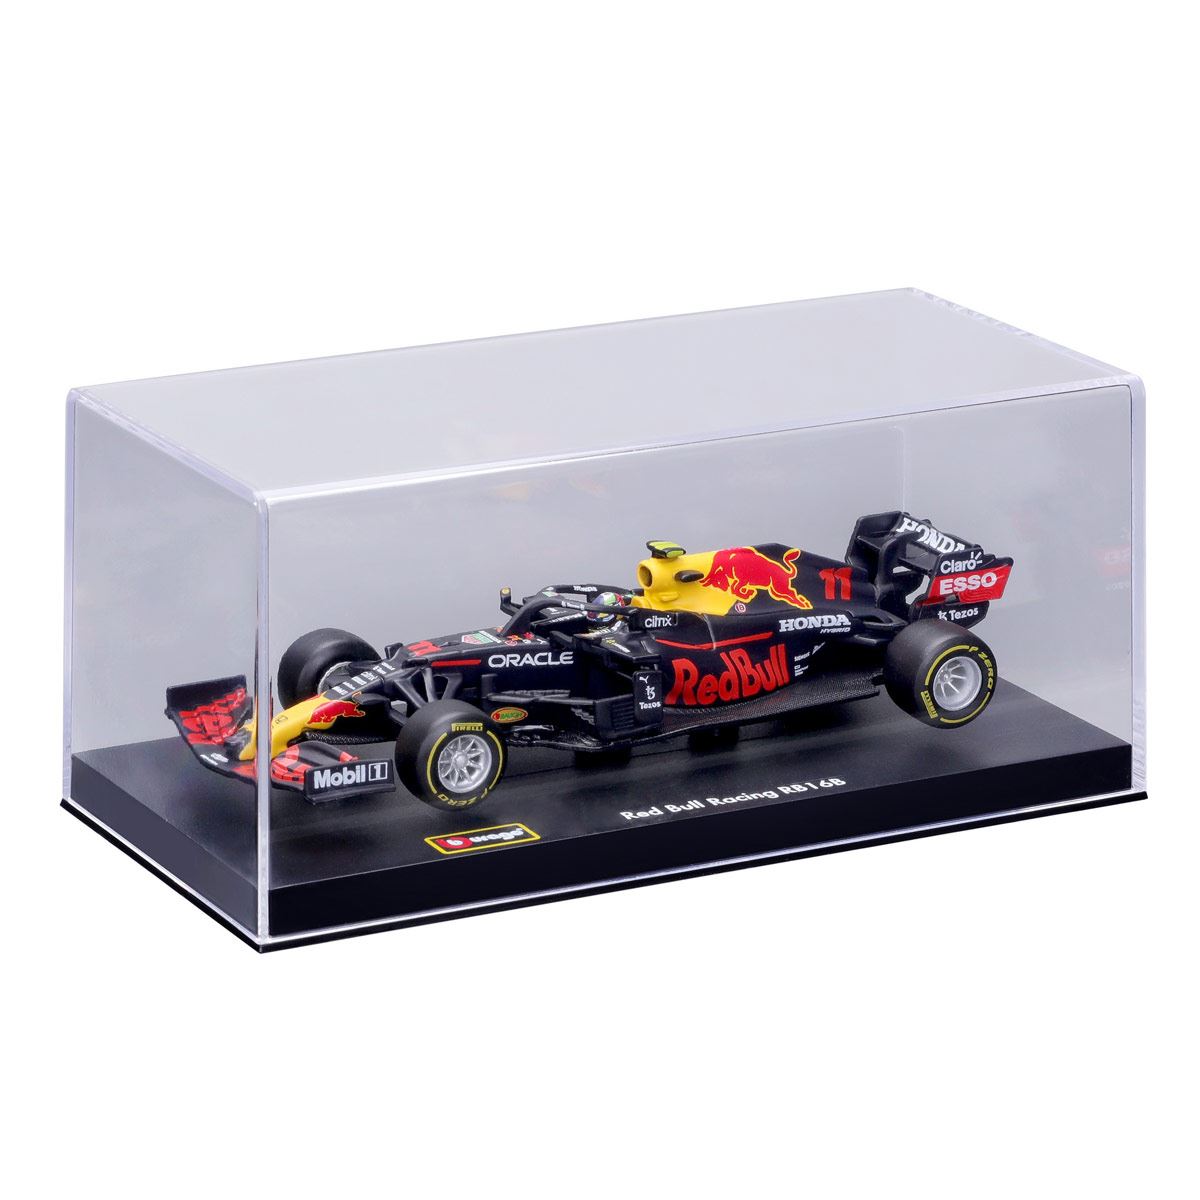 Colección de coches Miniatura de F1 - Fórmula 1 Videos